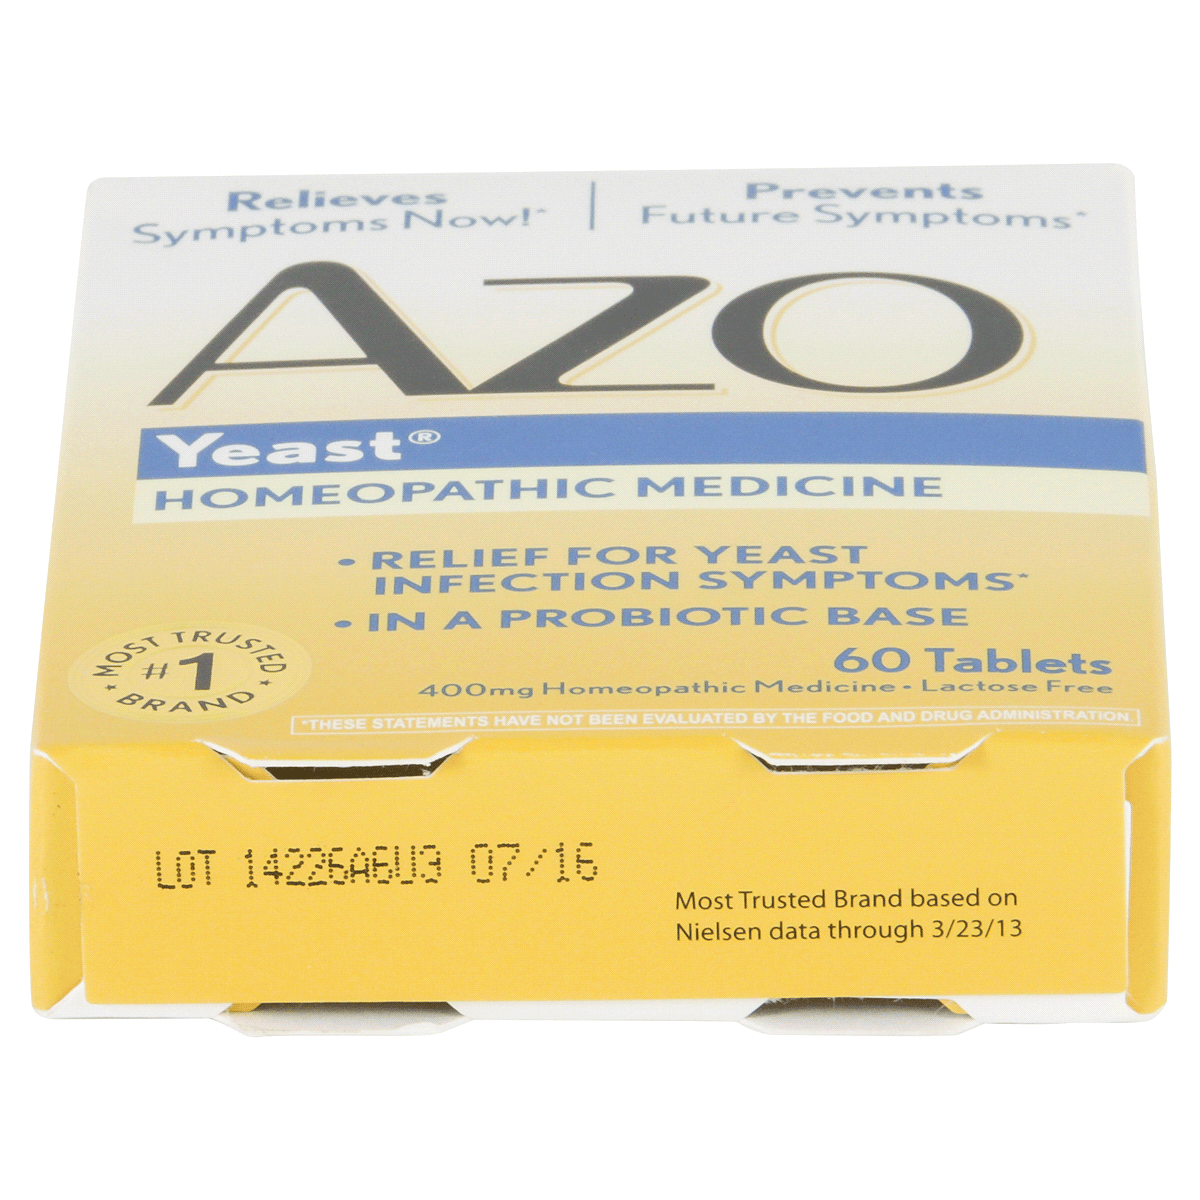 AZO Yeast Plus Infection Symptom Relief 60 ct